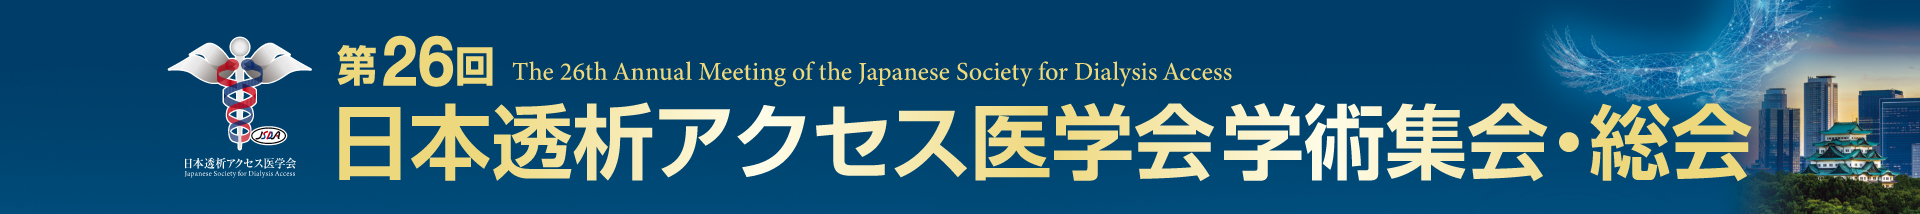 第26回日本透析アクセス医学会学術集会・総会